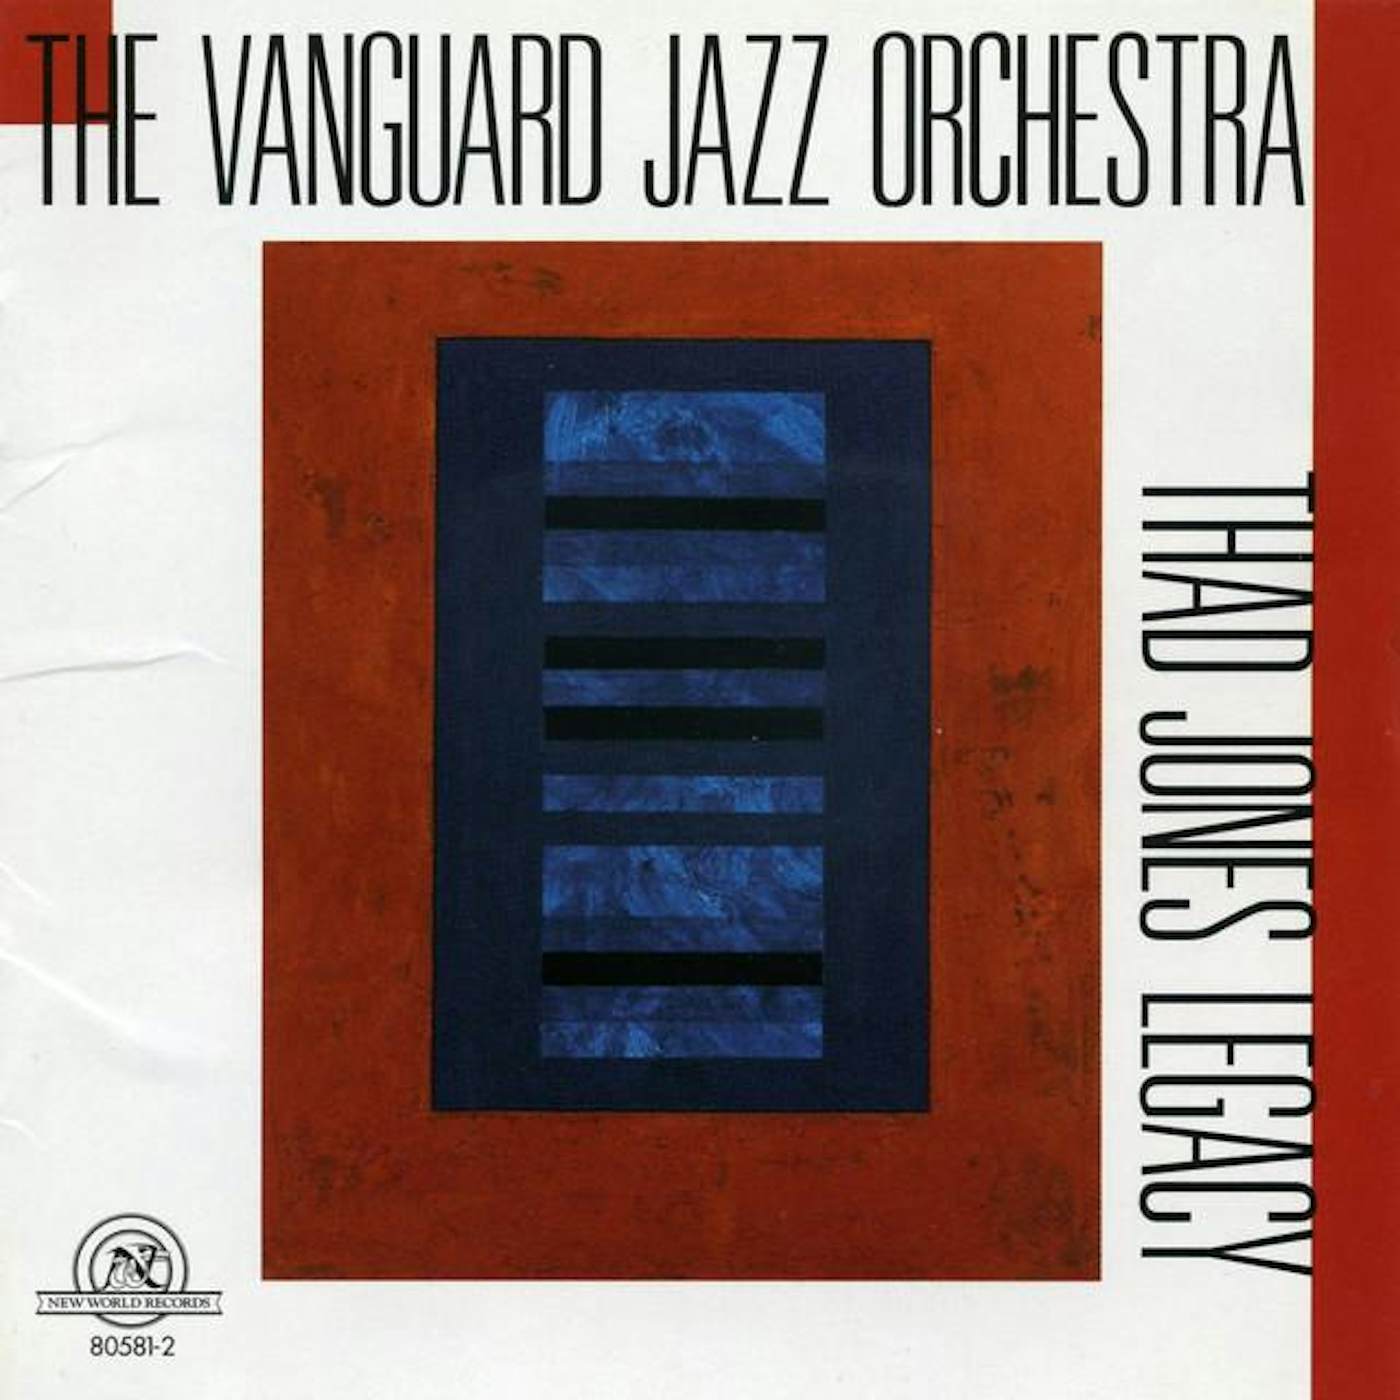 Vanguard Jazz Orchestra